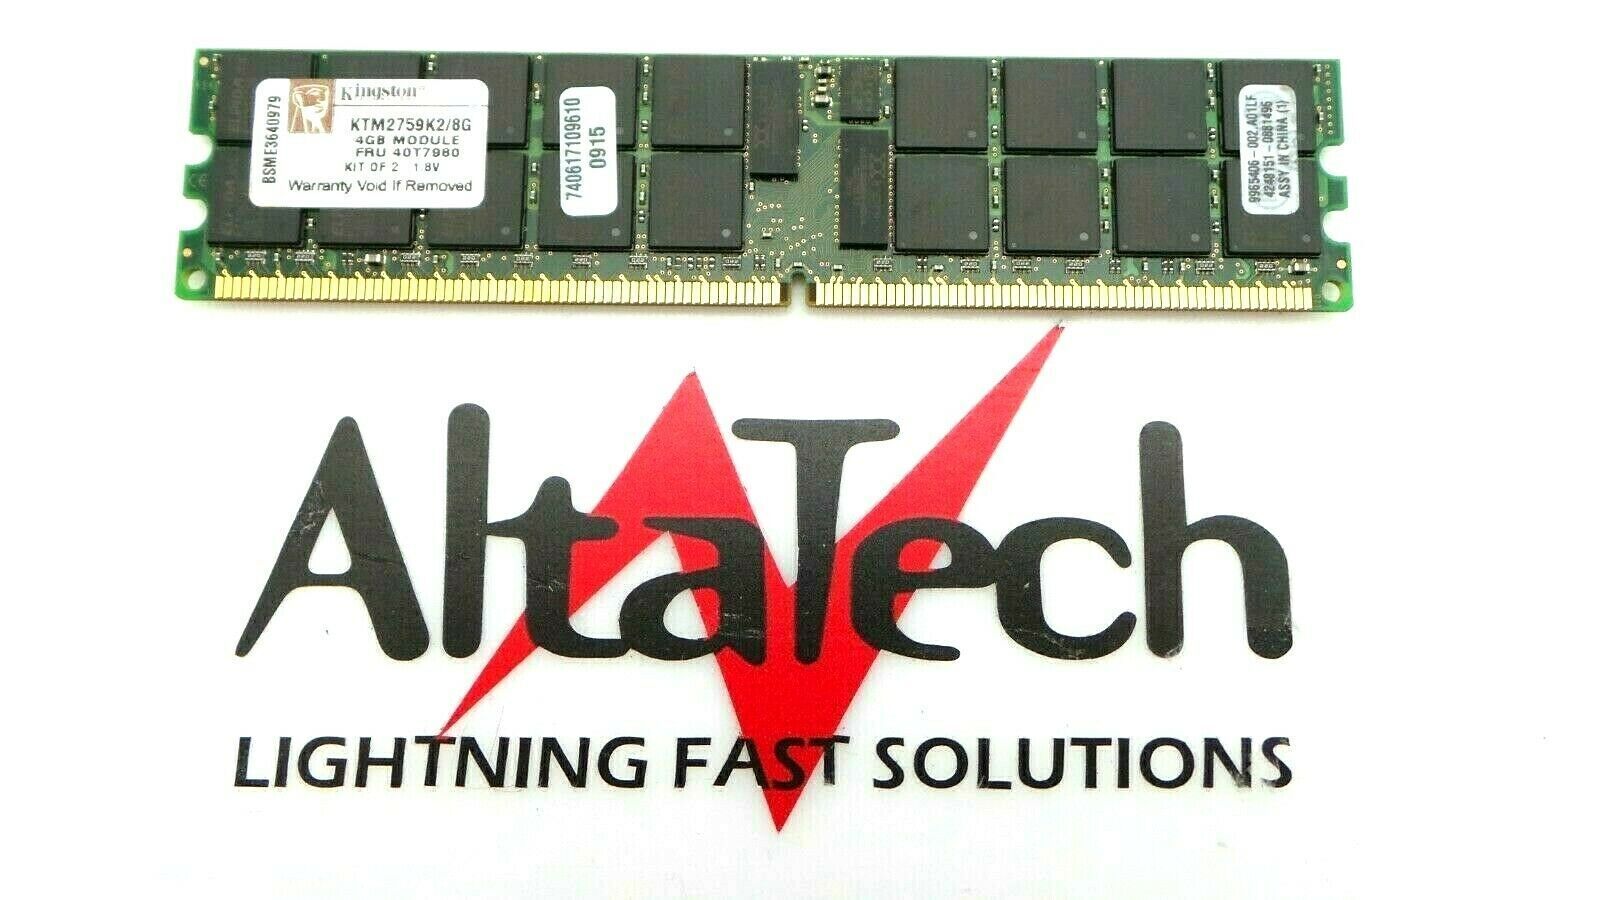 Kingston 44T7980 4GB 2RX4 PC2-5300R DDR2-667 RAM Memory - Fully Tested